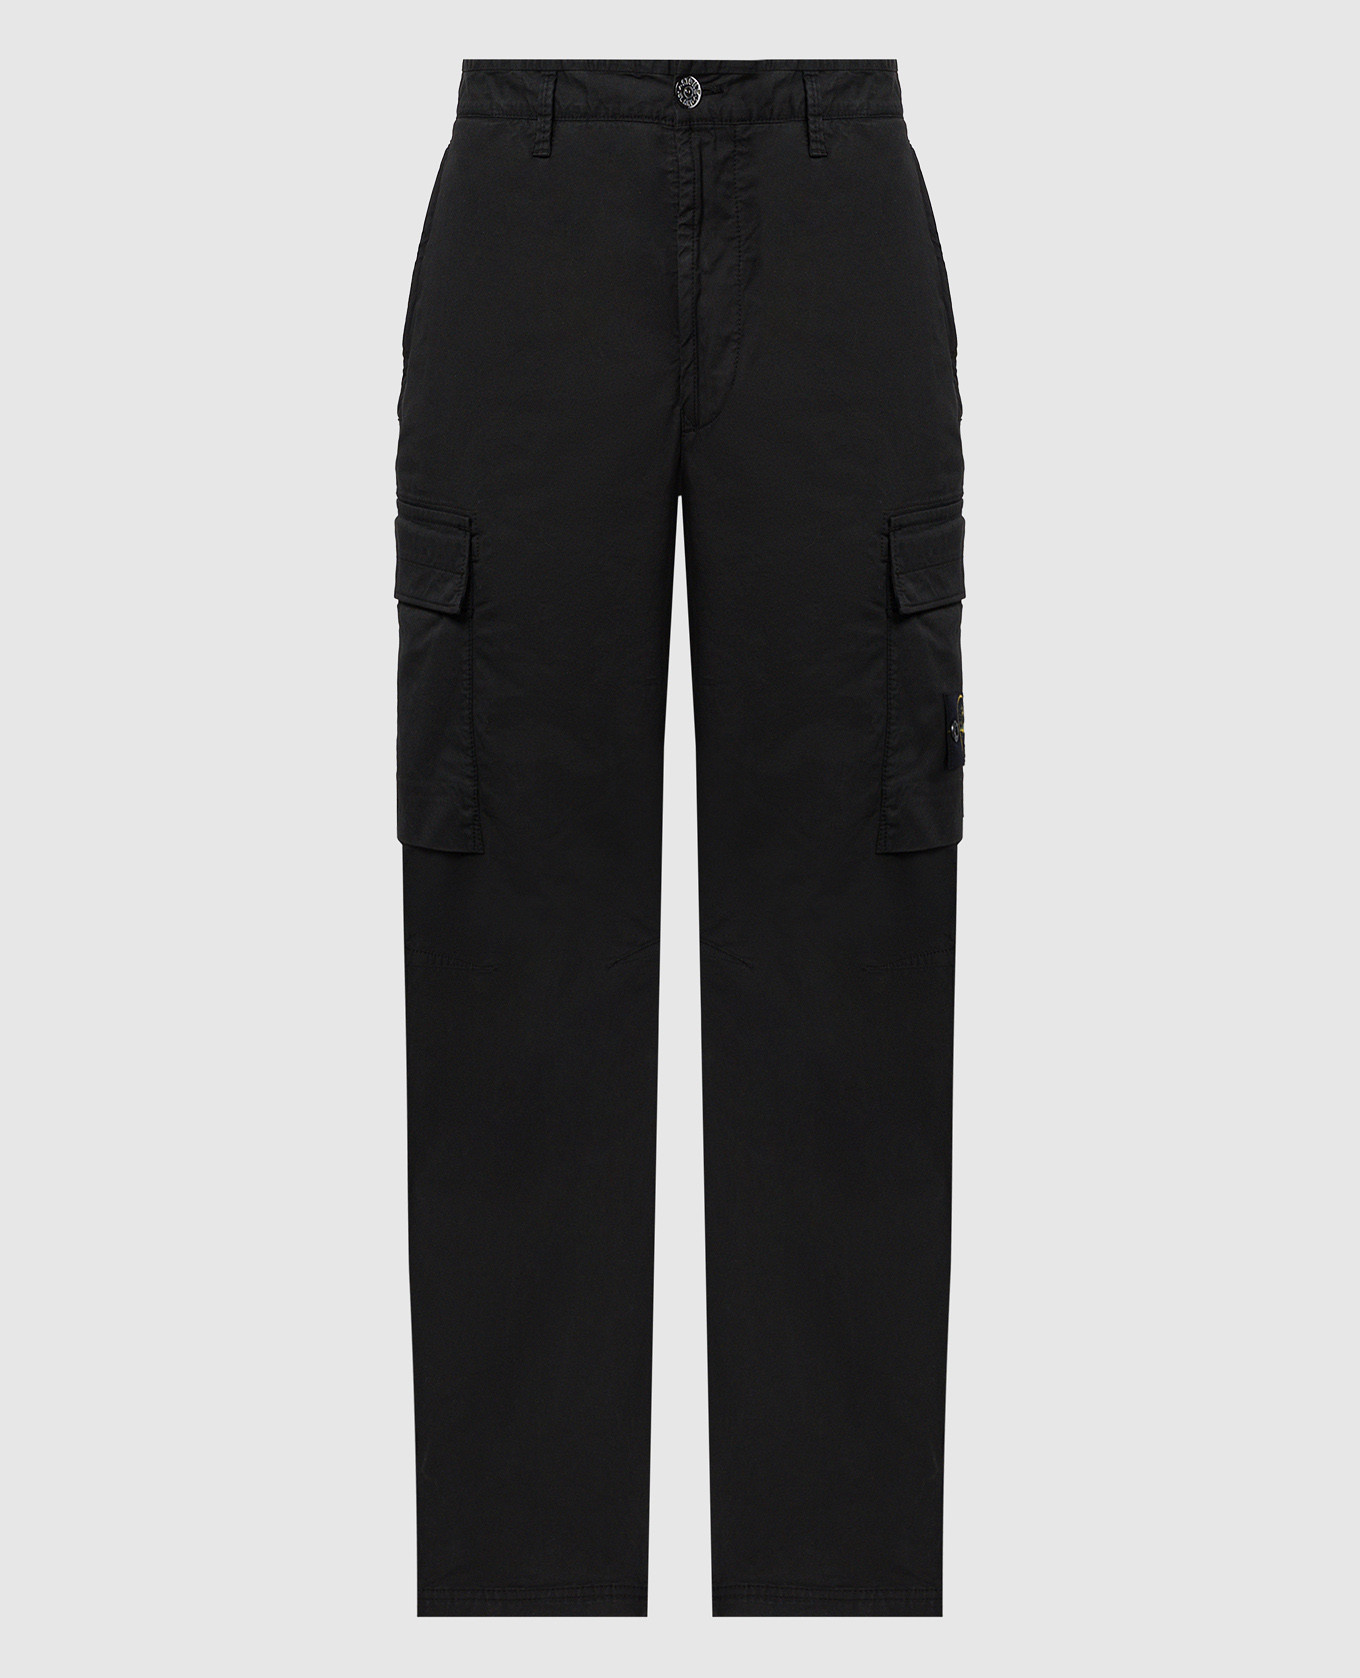 Pantaloni cargo neri con patch logo